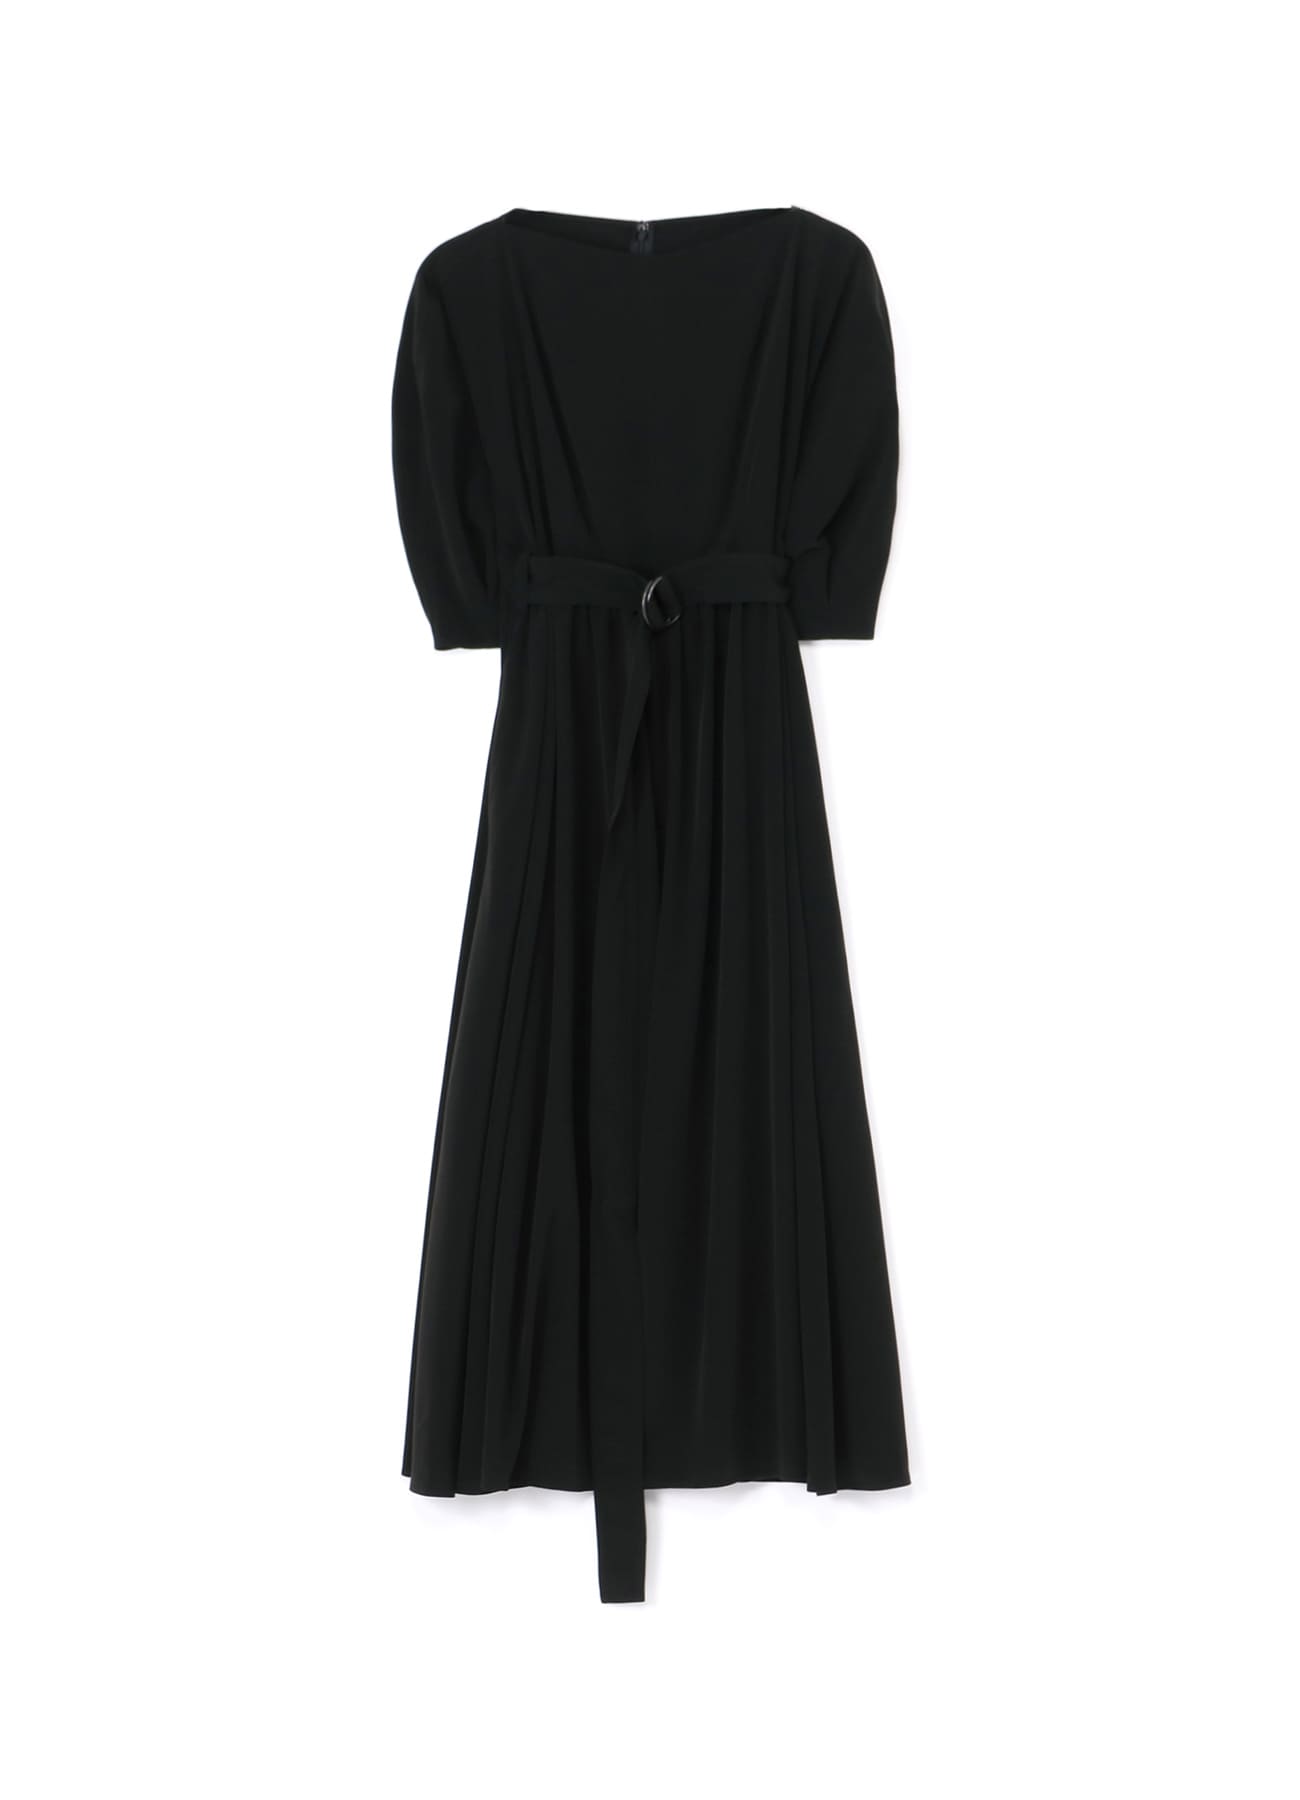 RAYON GEORGETTE OPEN COLLAR SLEEVELESS DRESS(XS Black): Vintage 1.1｜THE  SHOP YOHJI YAMAMOTO